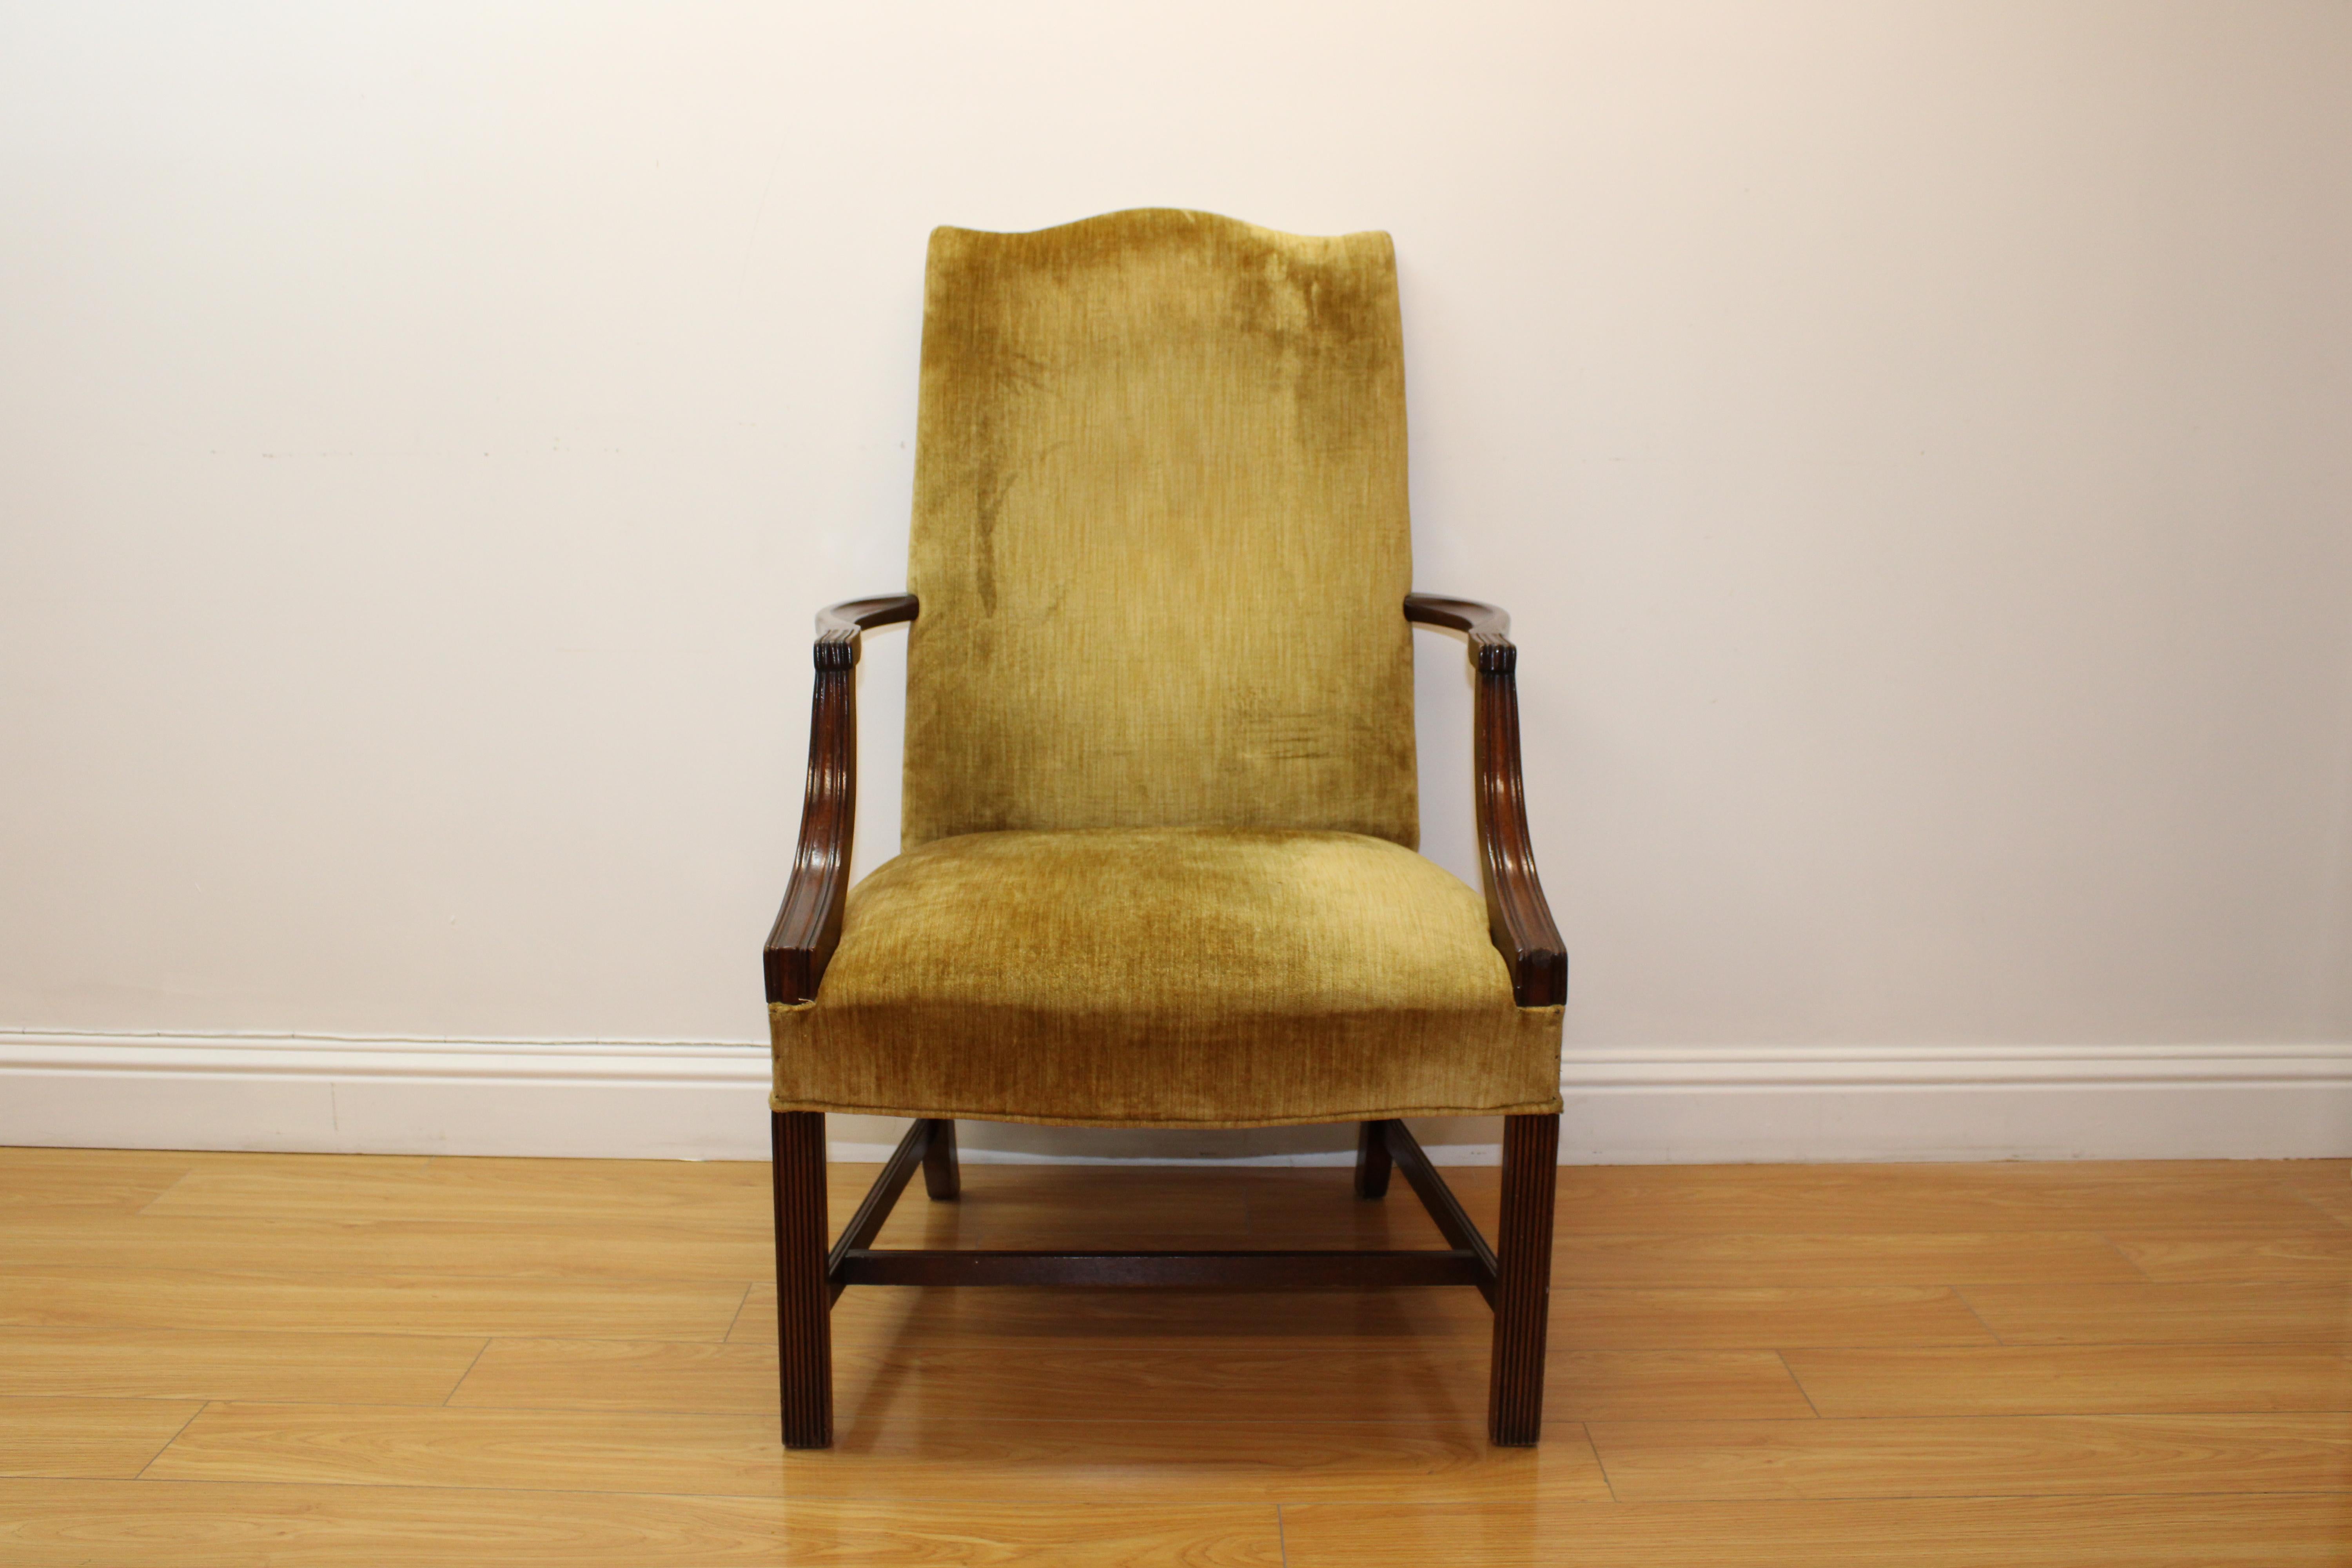 C. 20th century.

High back mahogany arm chair w/ velvet upholstery.